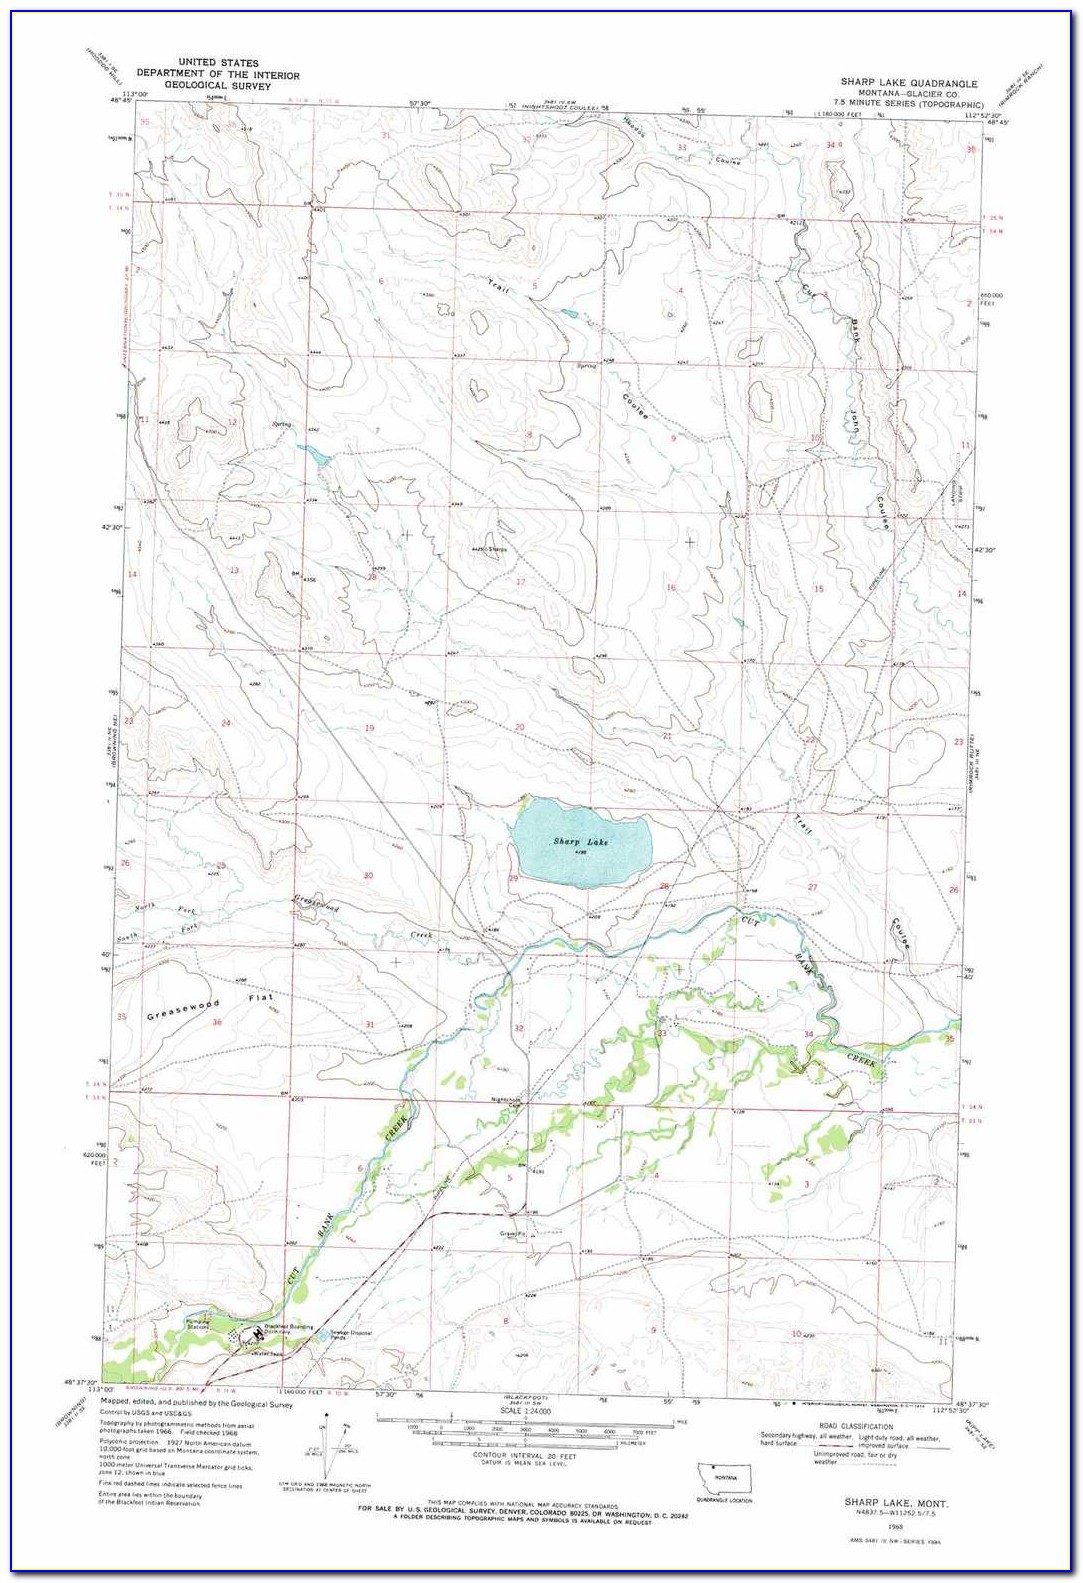 Lake Sharpe Contour Map